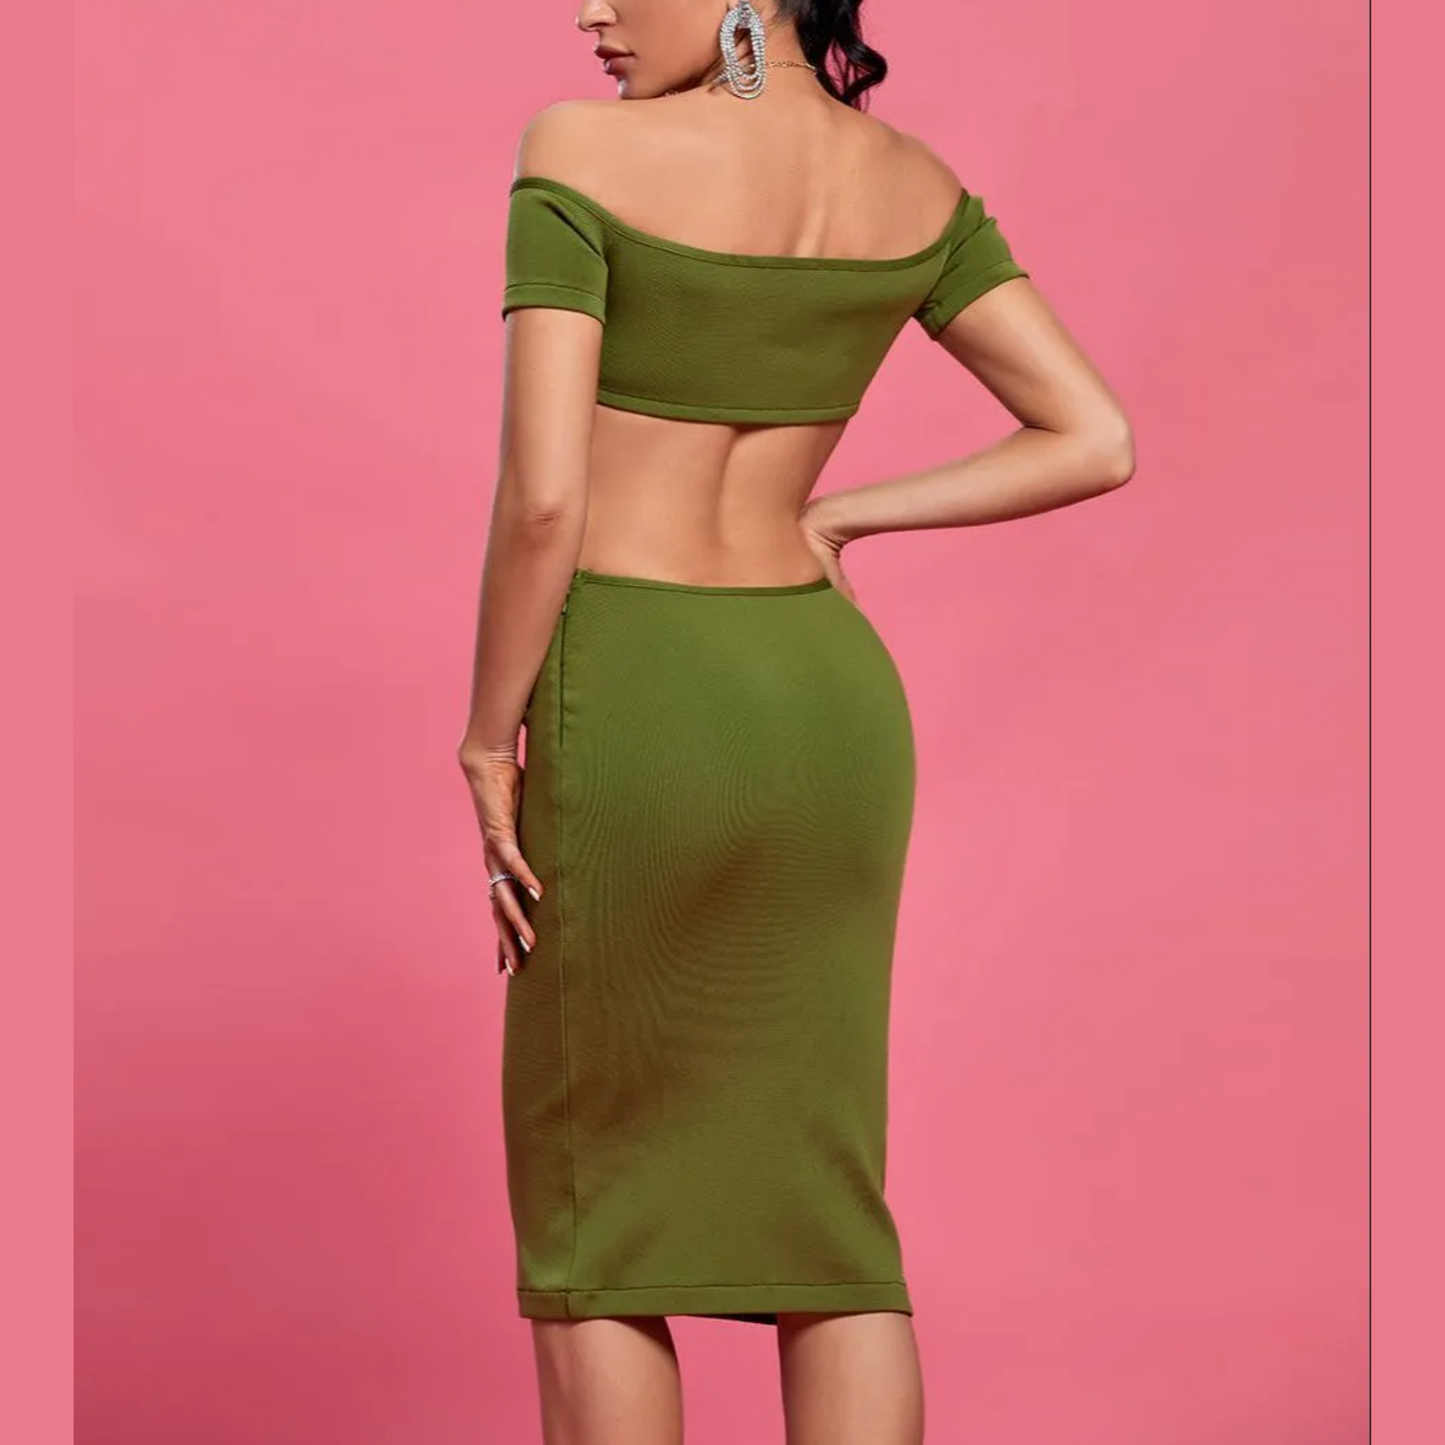 Della - Green Cutout Chain Embellished Bandage Dress